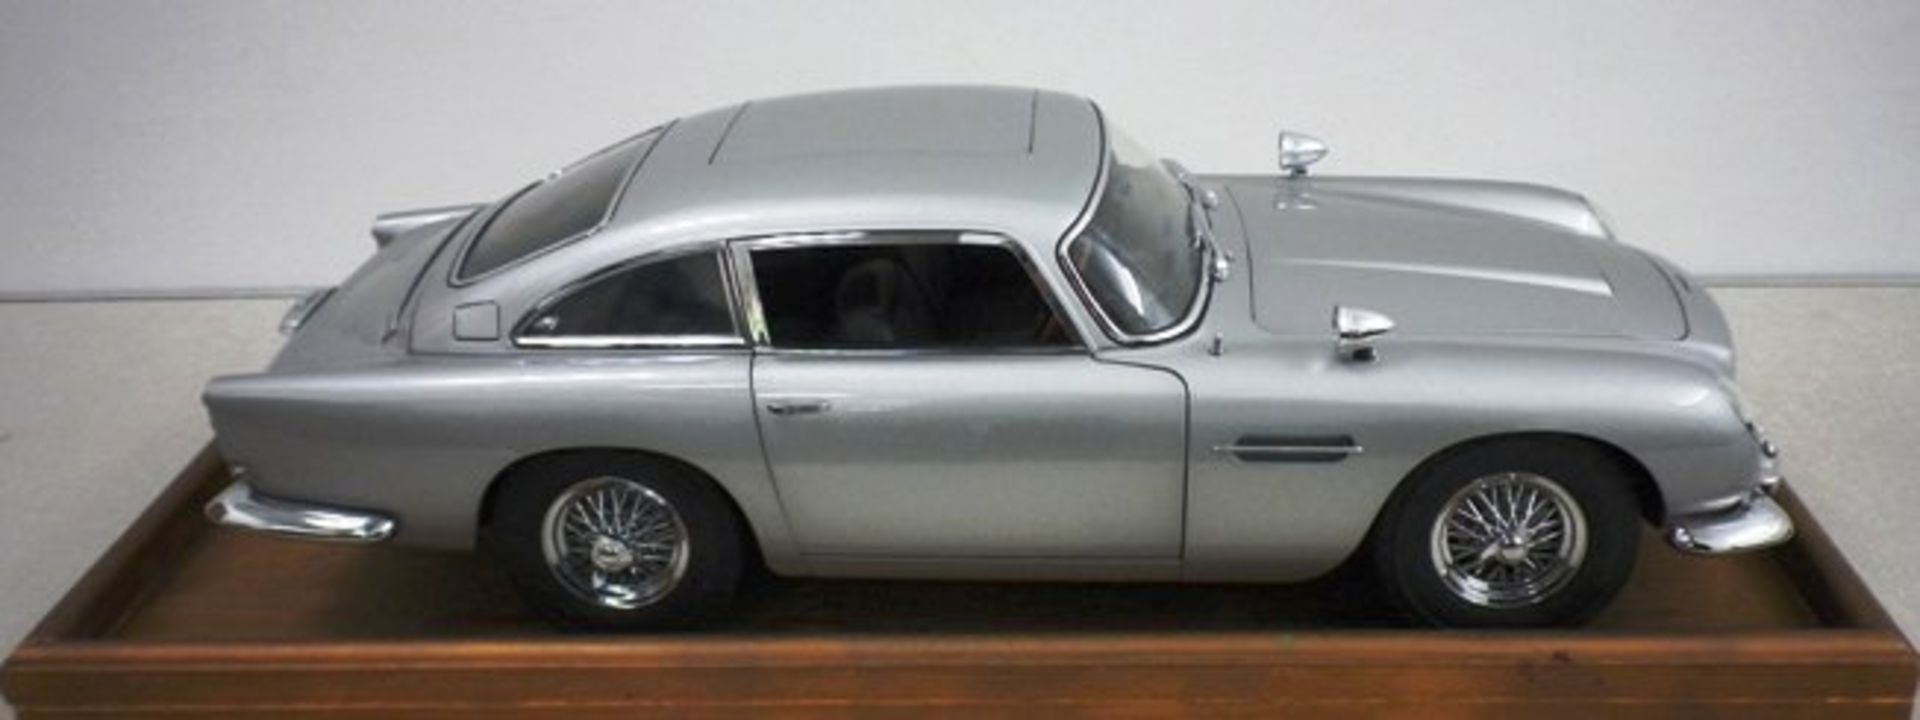 James Bond Aston Martin DB5.Estimate : £850 - £1,000 A large 1/8 scale, hand-built model of the